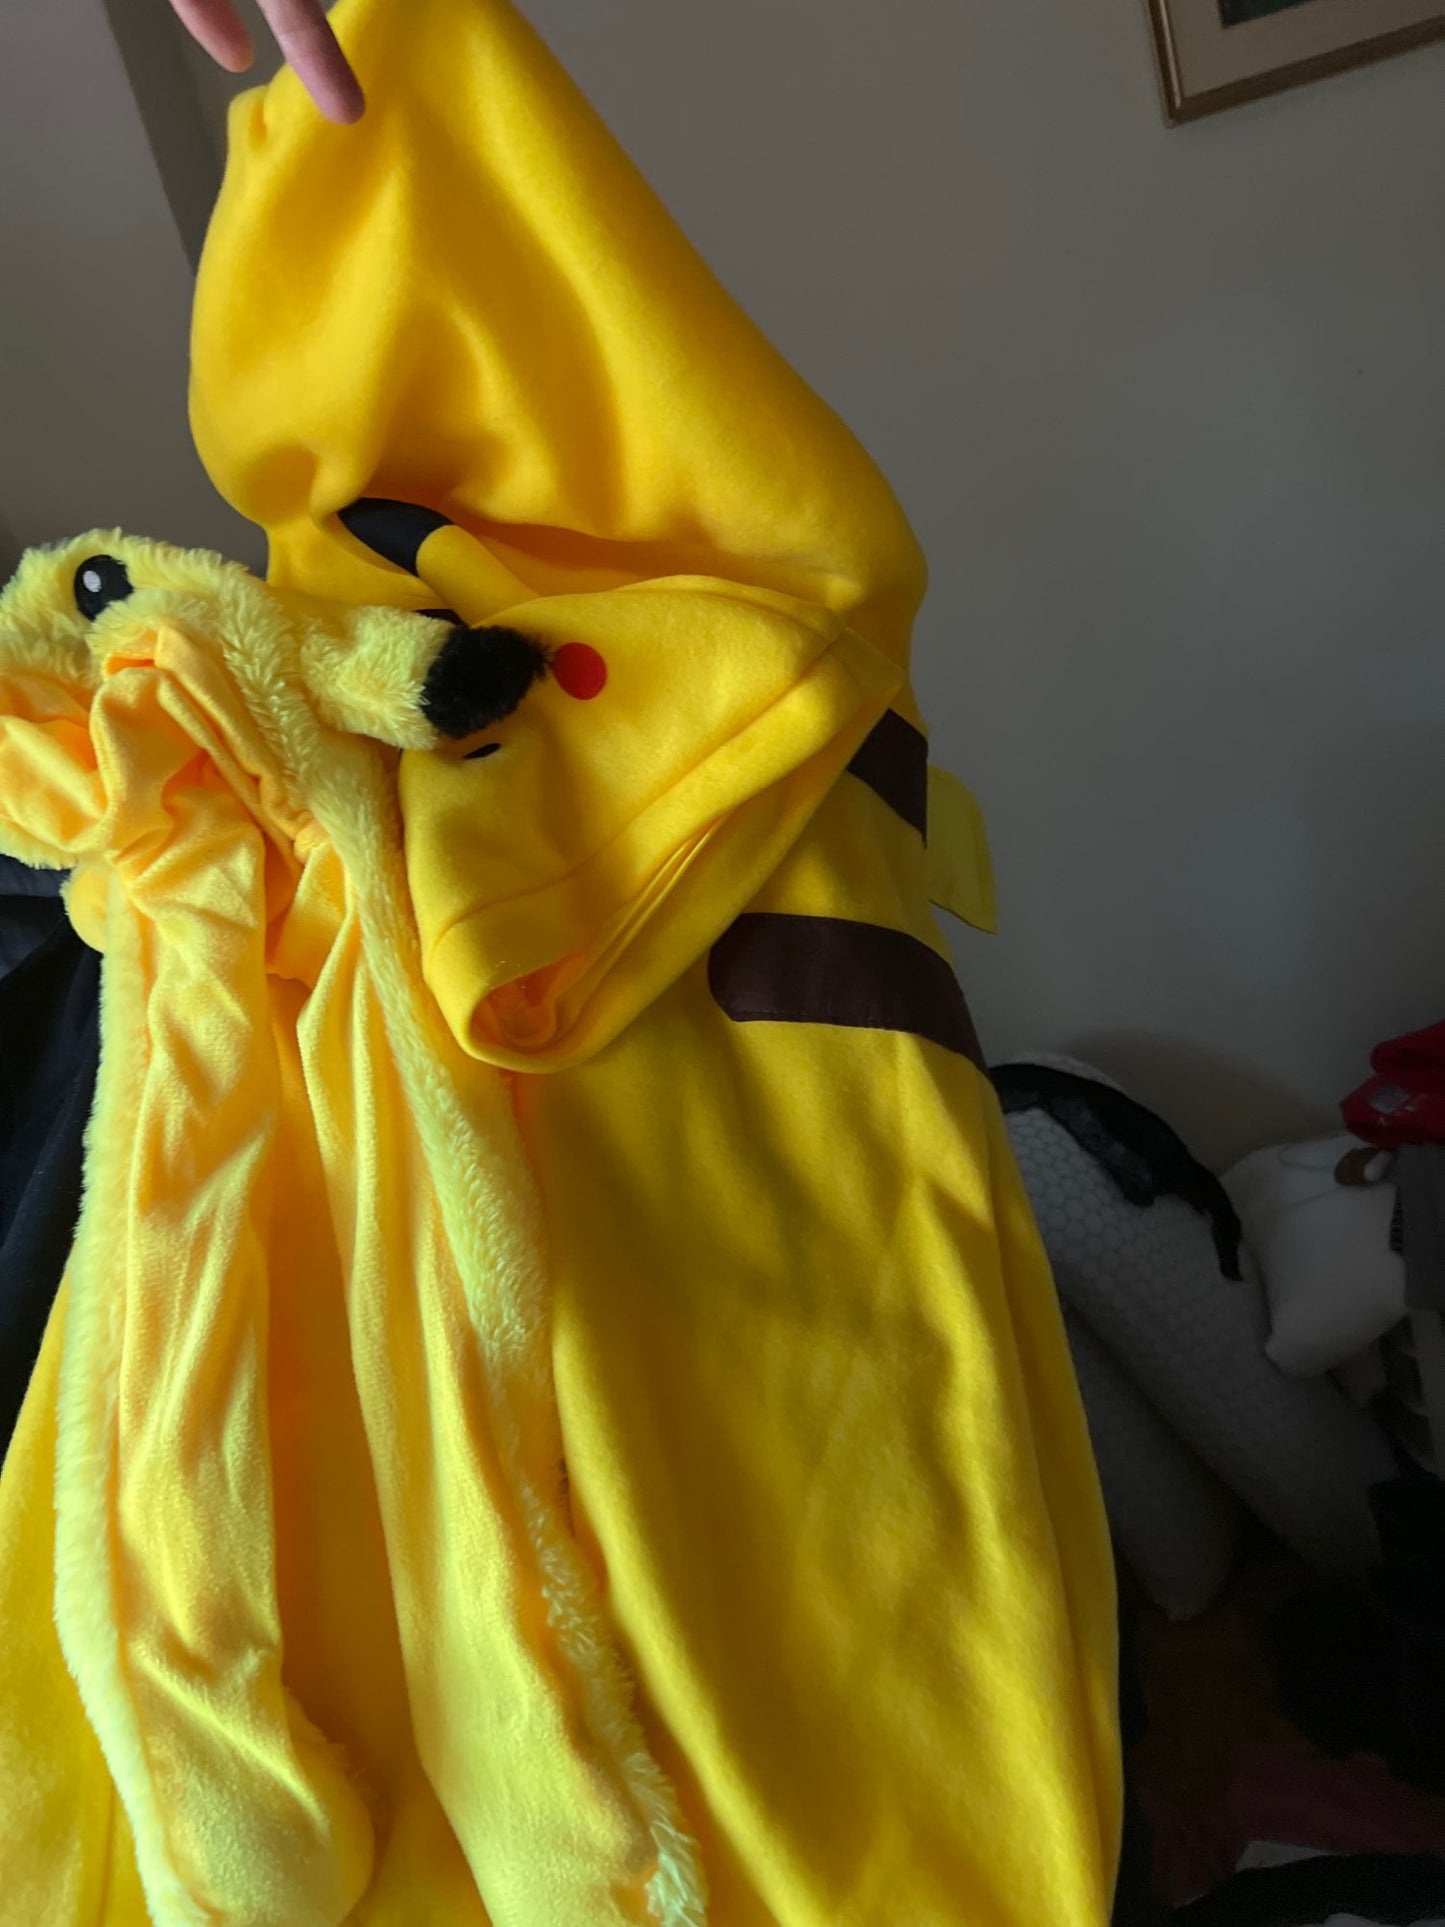 Pyjama pokemon cosplay pikachu deguisement dracaufeu carapuce